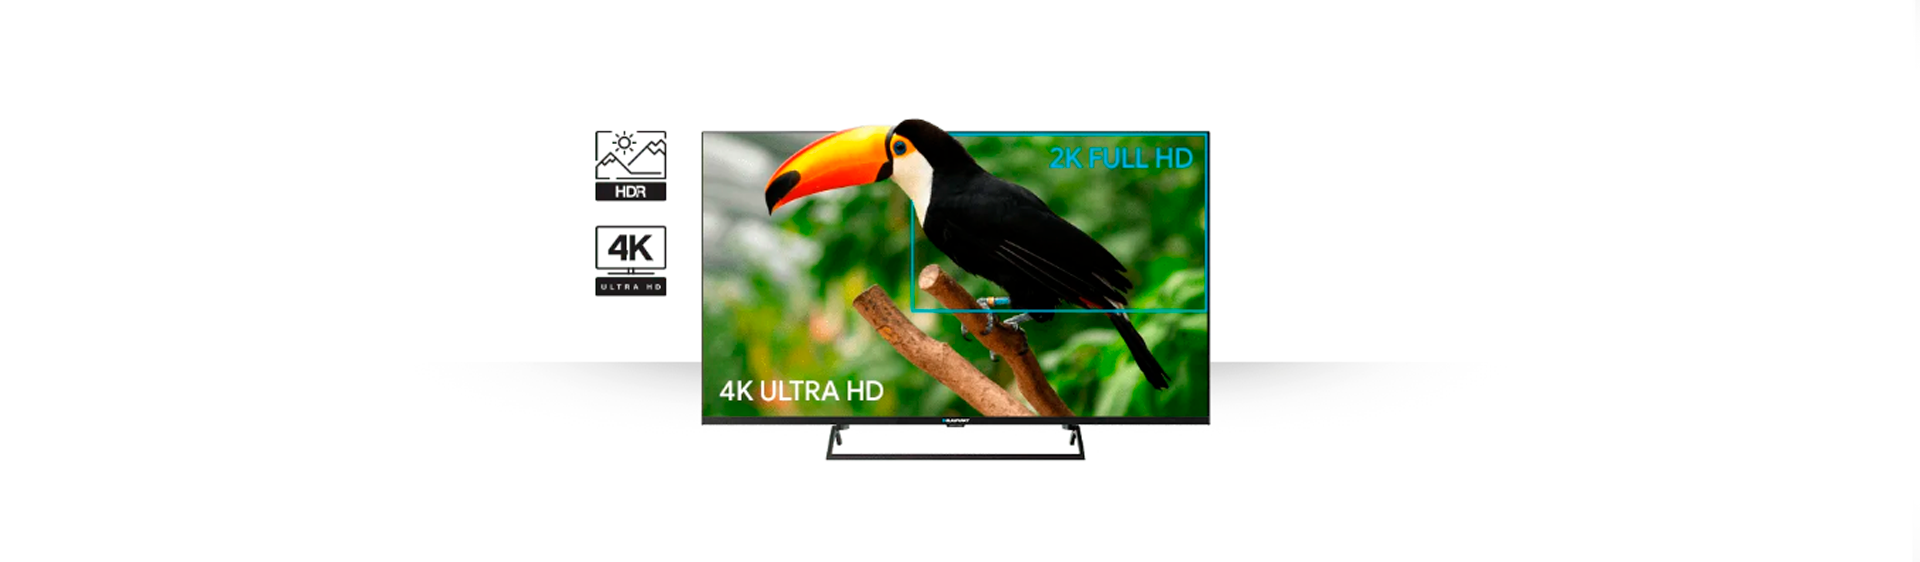 TV UHD 4K Smart TV LED Blaupunkt 55UB7000